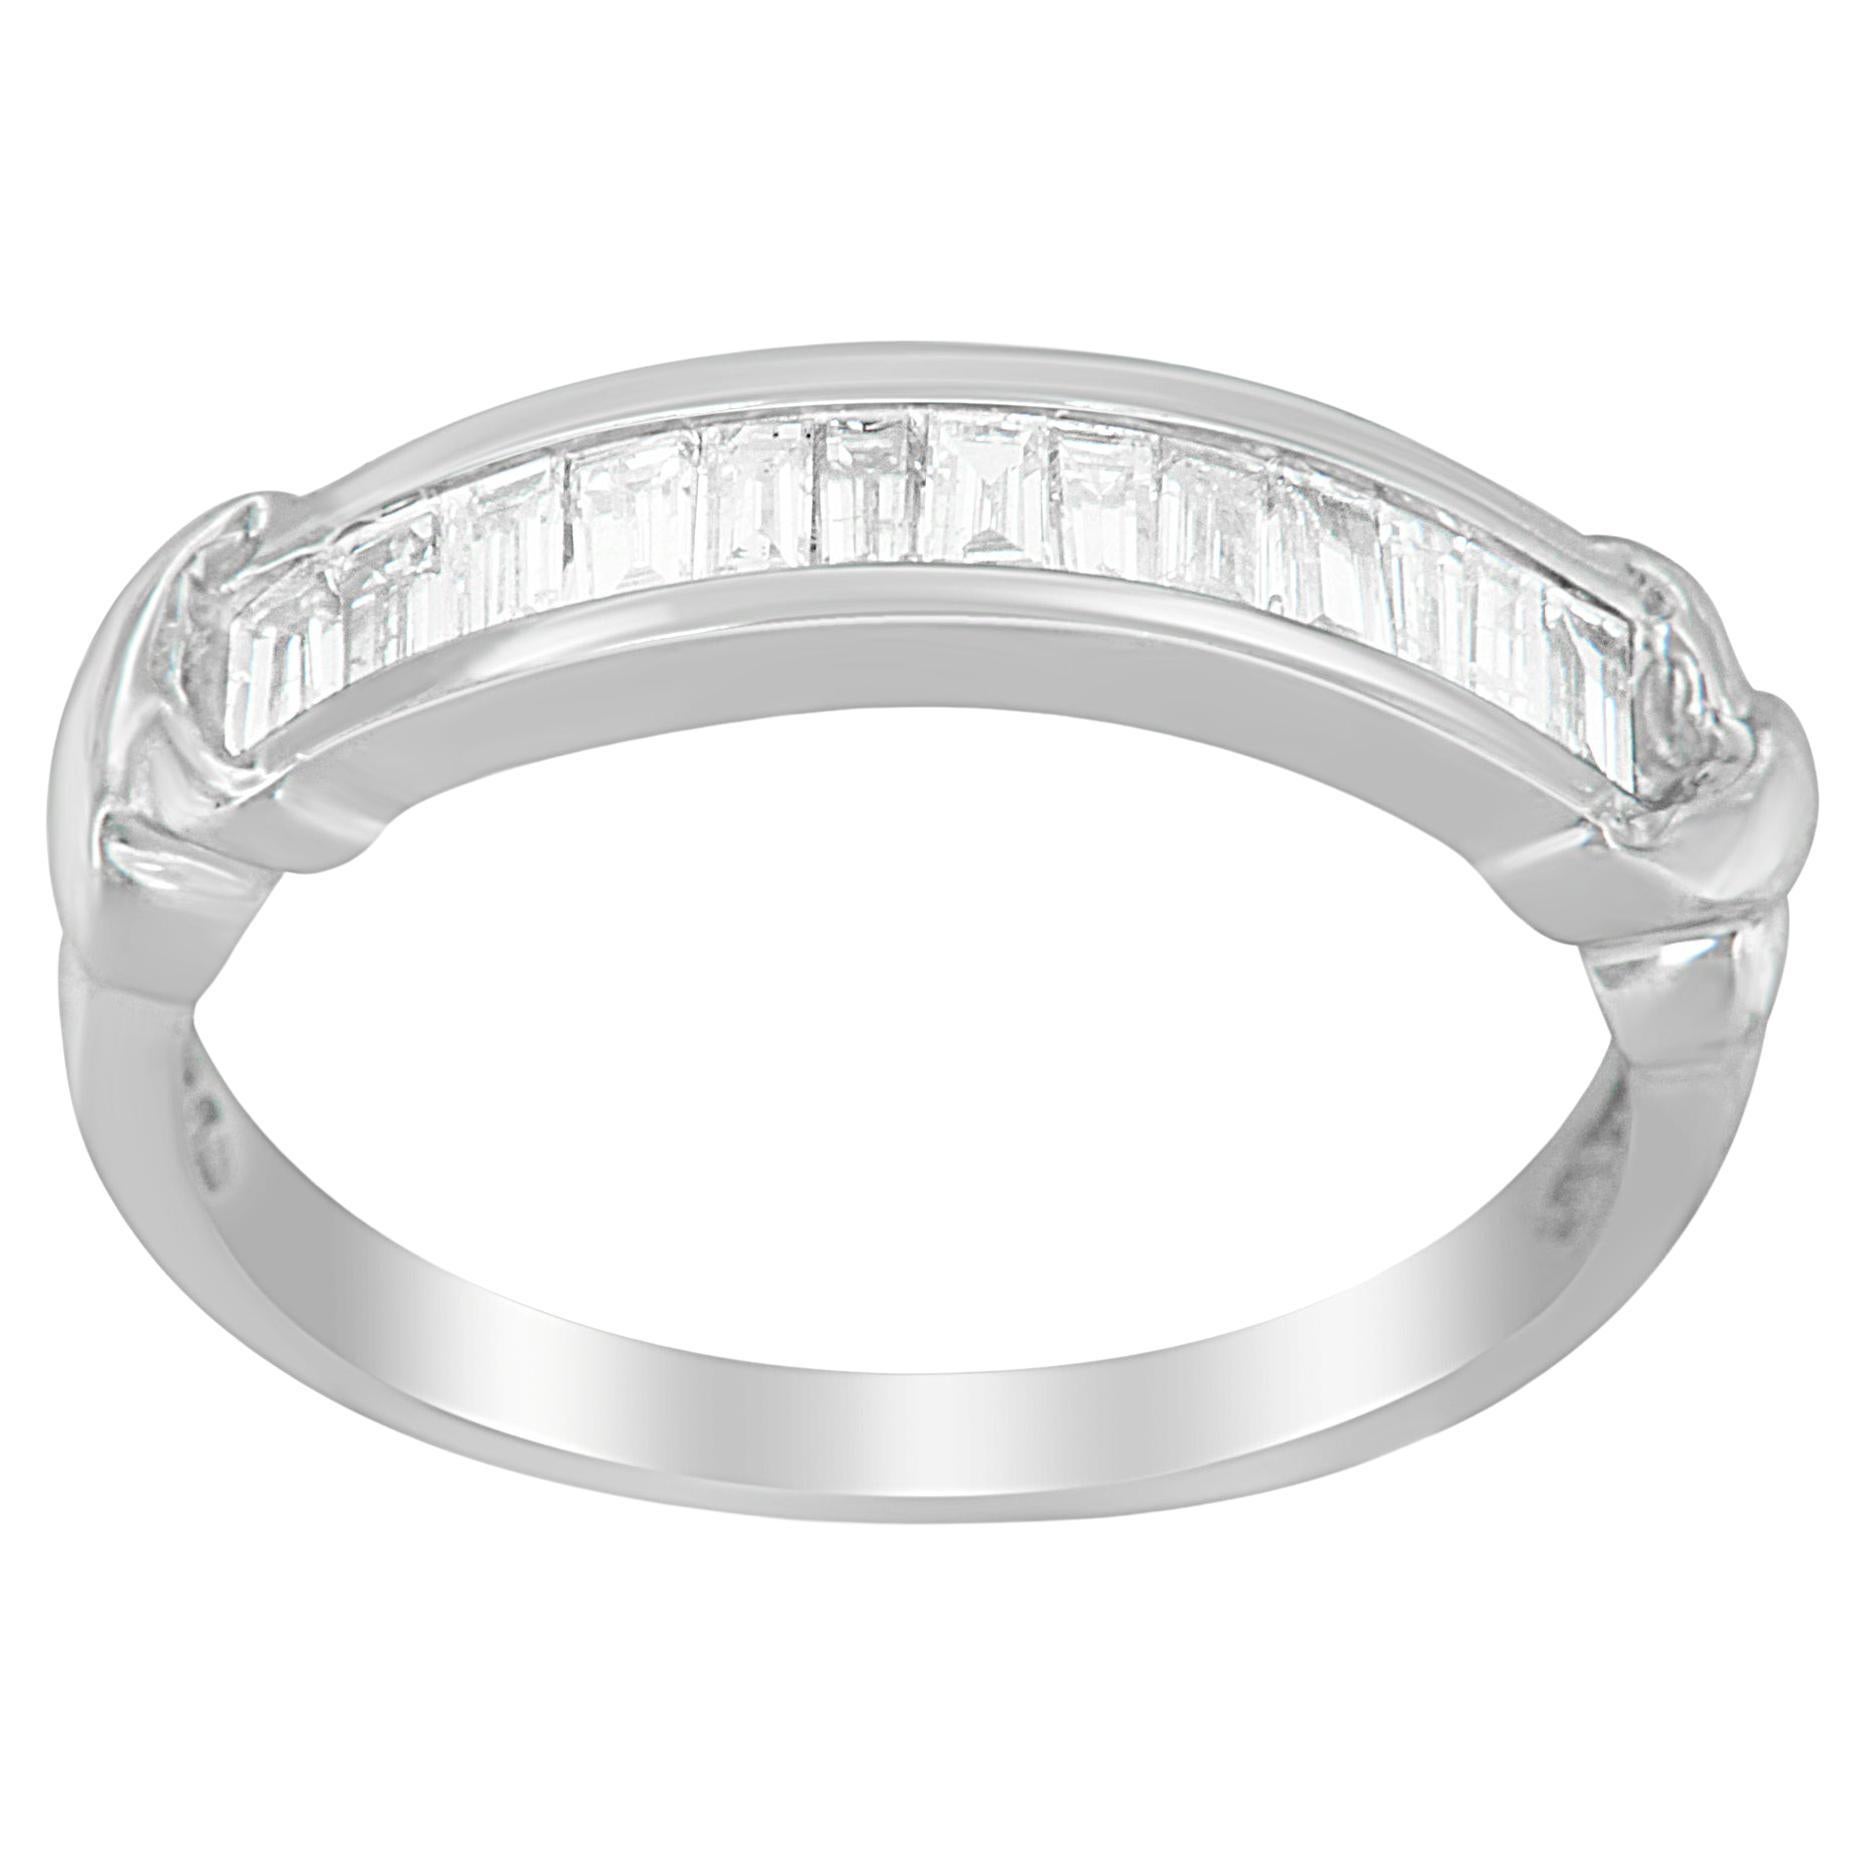 Sterling Silver 1/2 Carat Diamond Band Ring